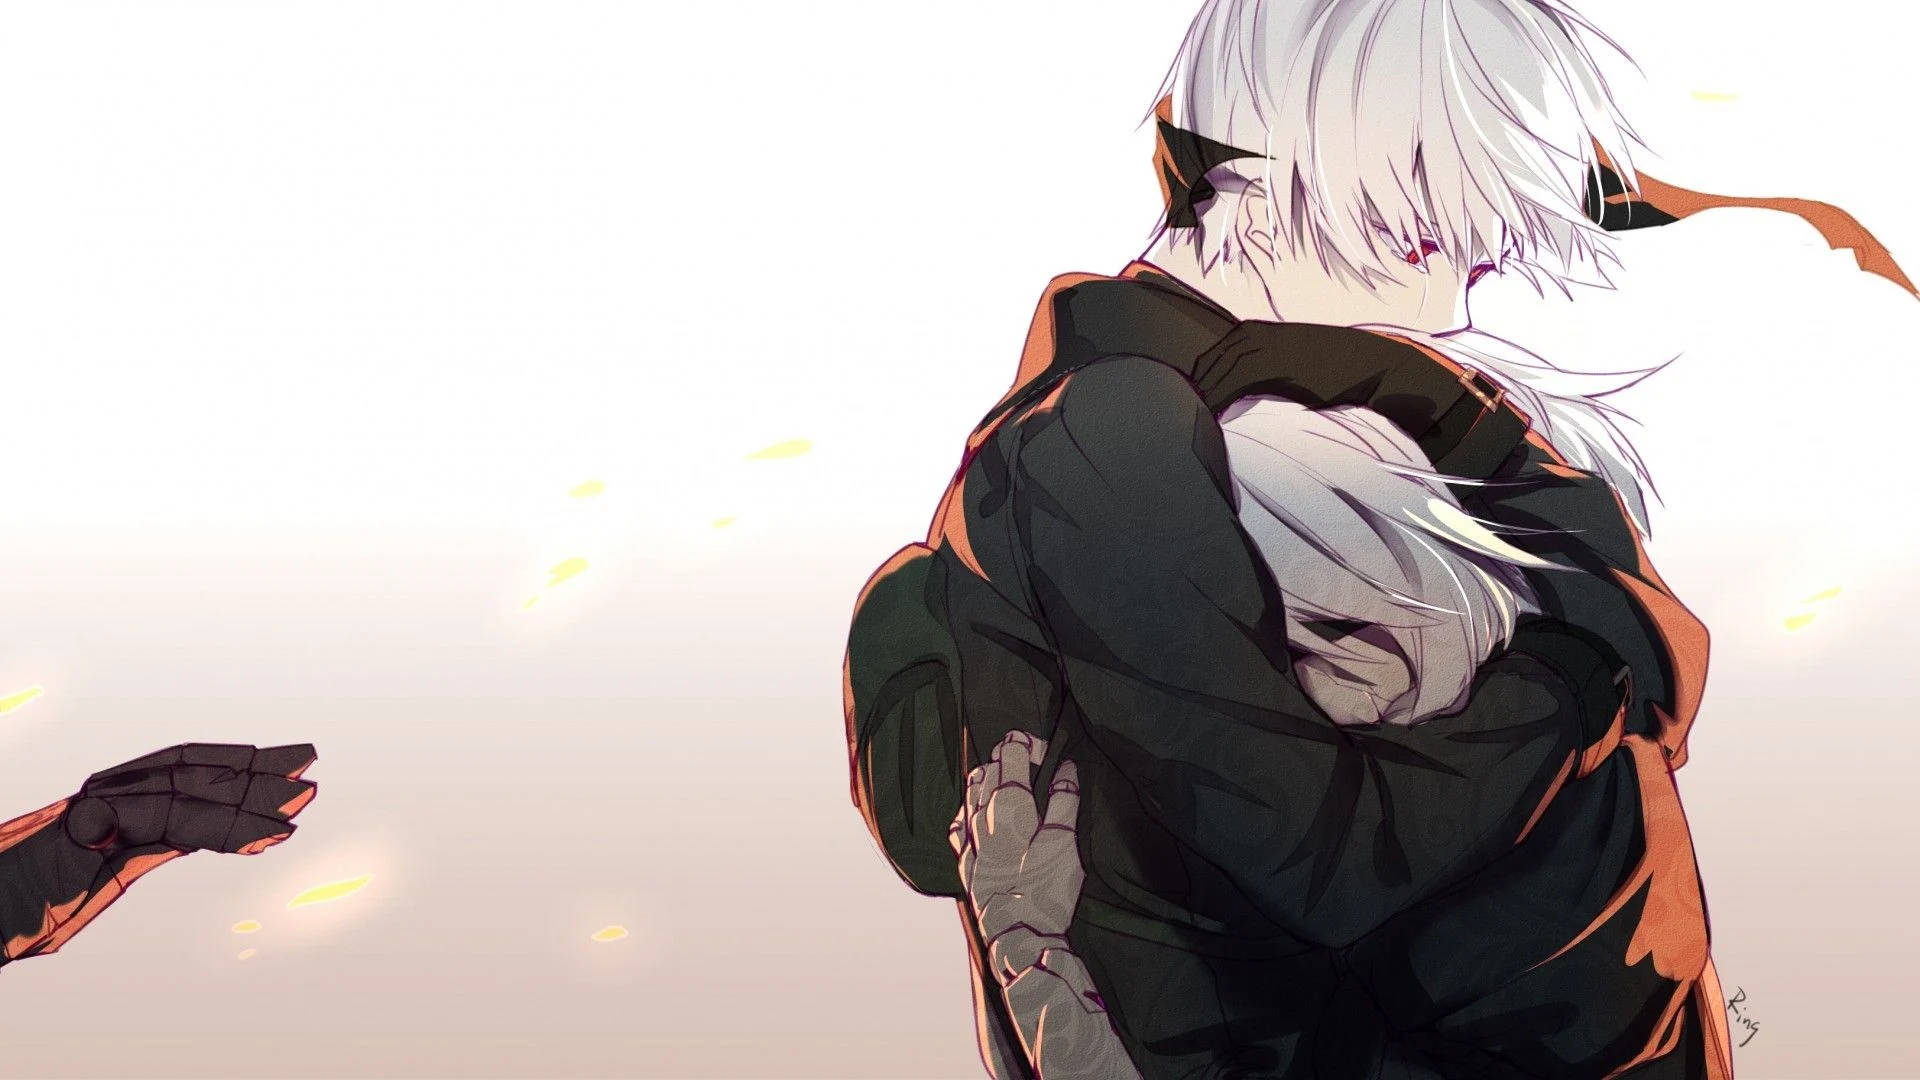 Anime Hug Couple With White Hair